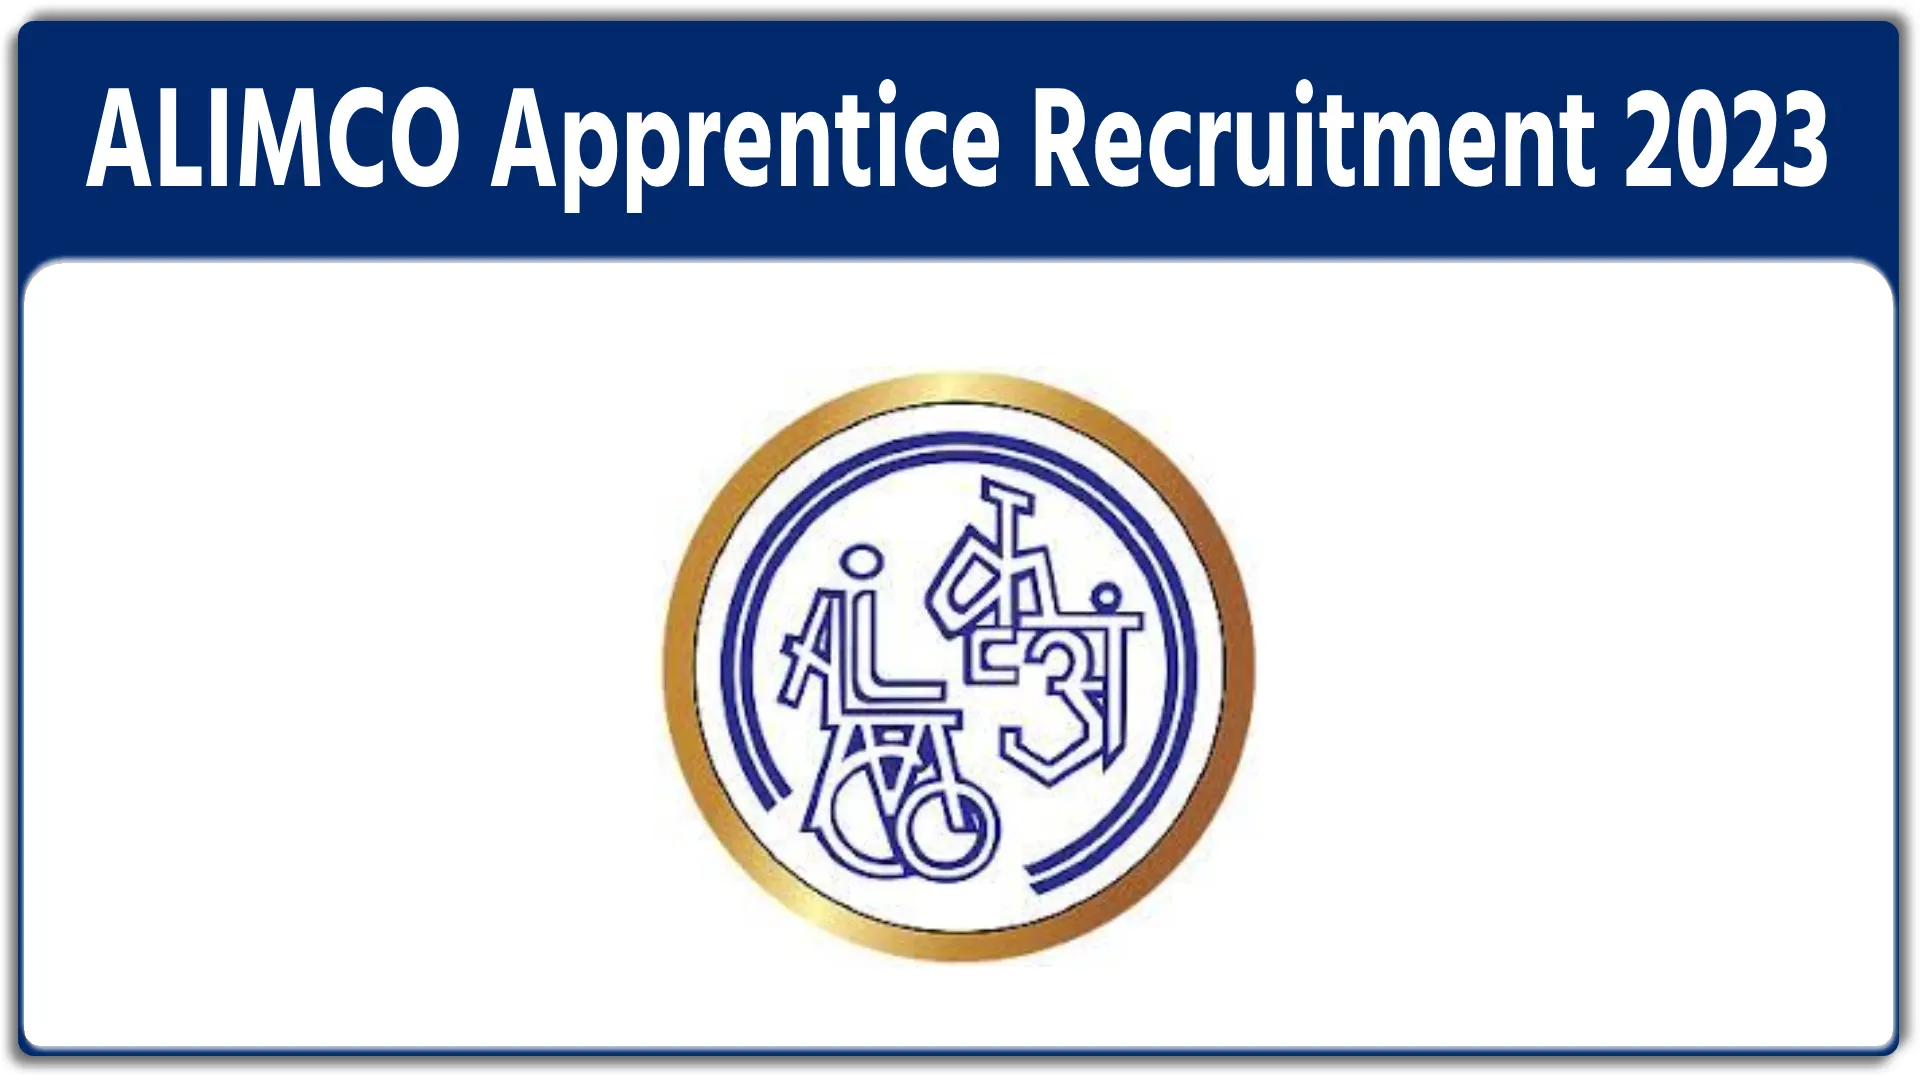 ALIMCO Apprentice Recruitment 2023 Notification